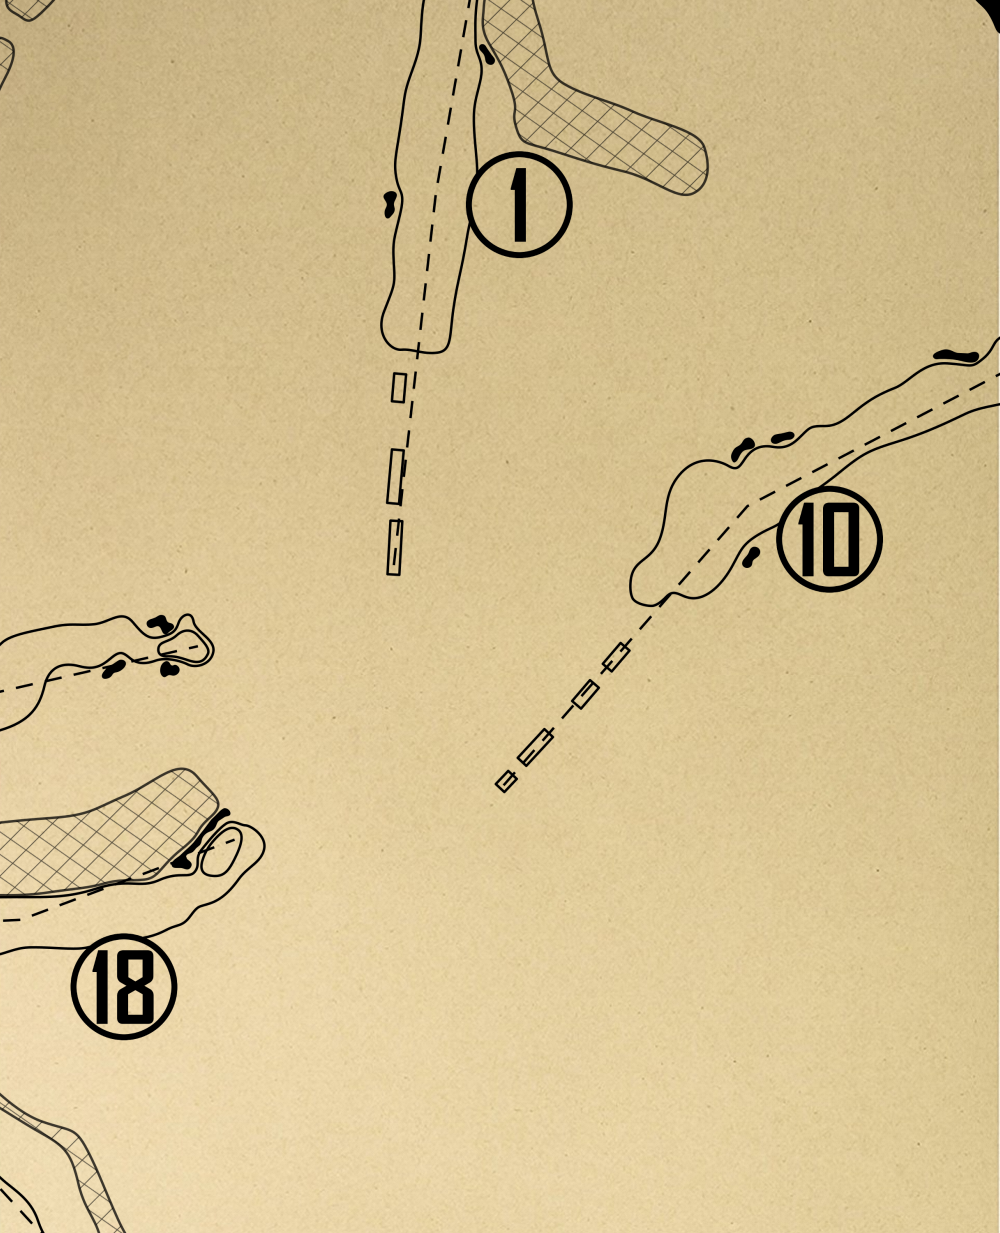 Retreat at Sea Island Golf Club Outline (Print)